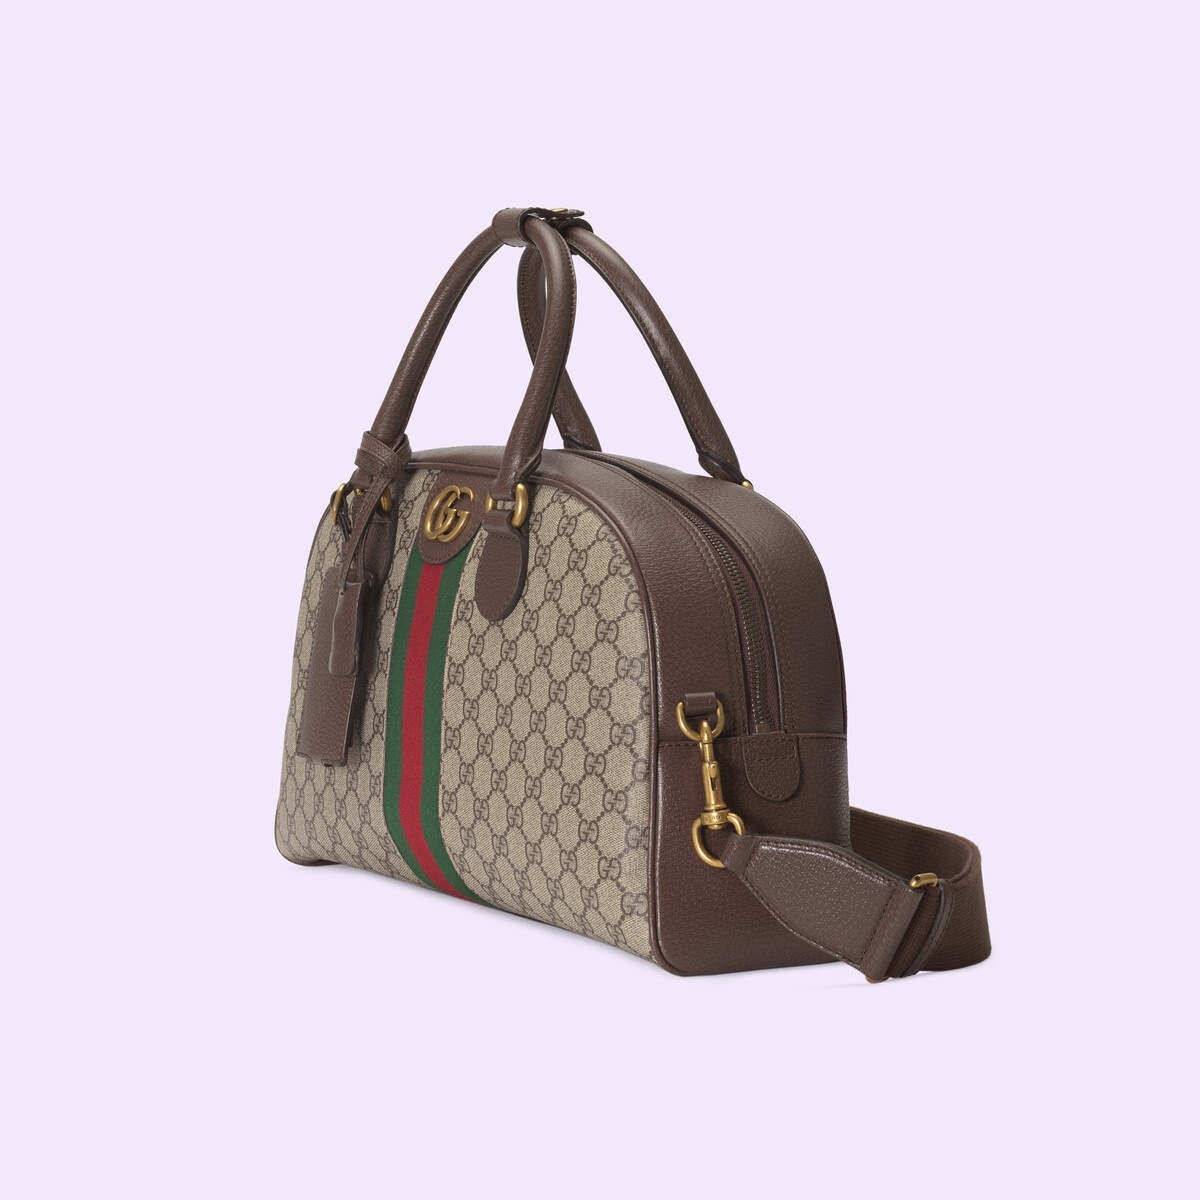 Gucci Savoy maxi duffle bag in beige and ebony Supreme